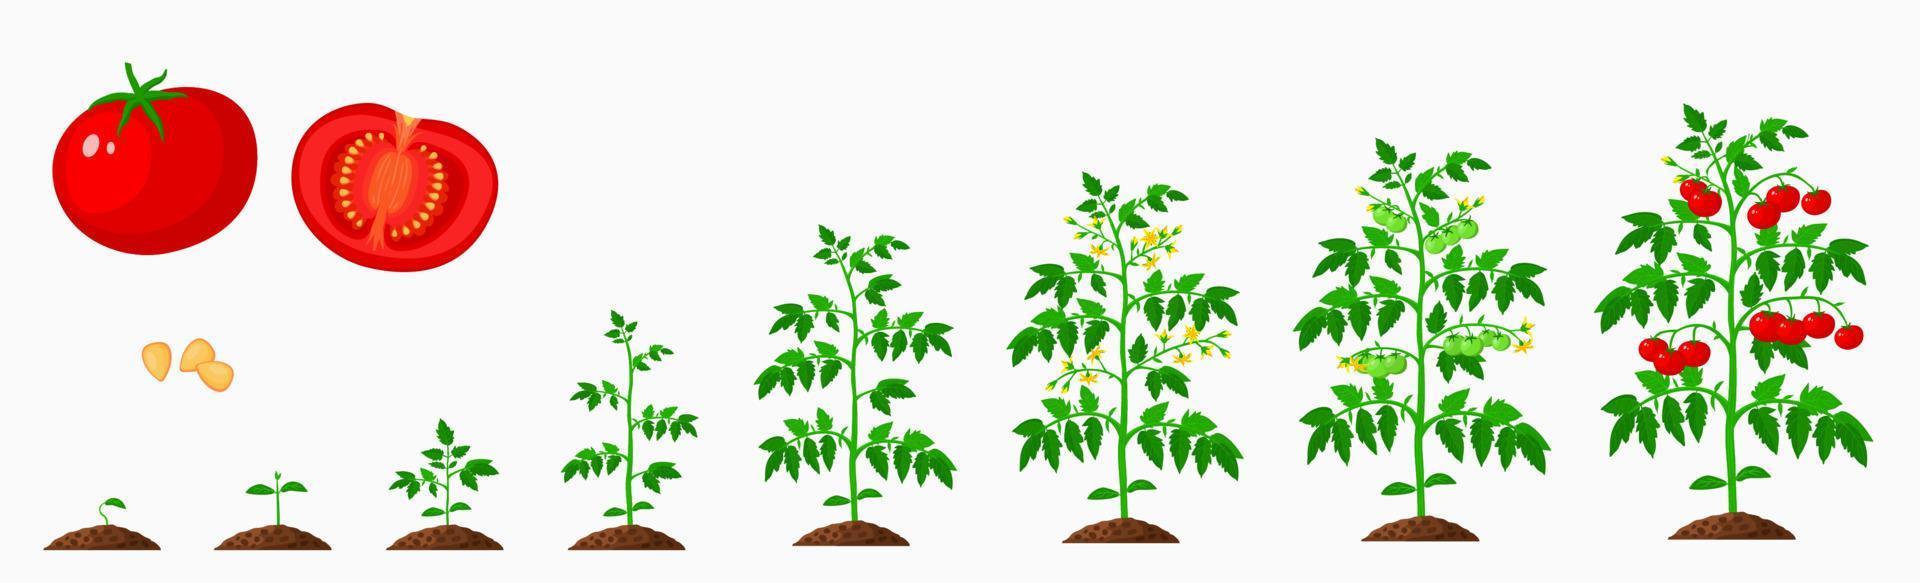 tomate crescimento estágios, vegetal plantar vida ciclo vetor